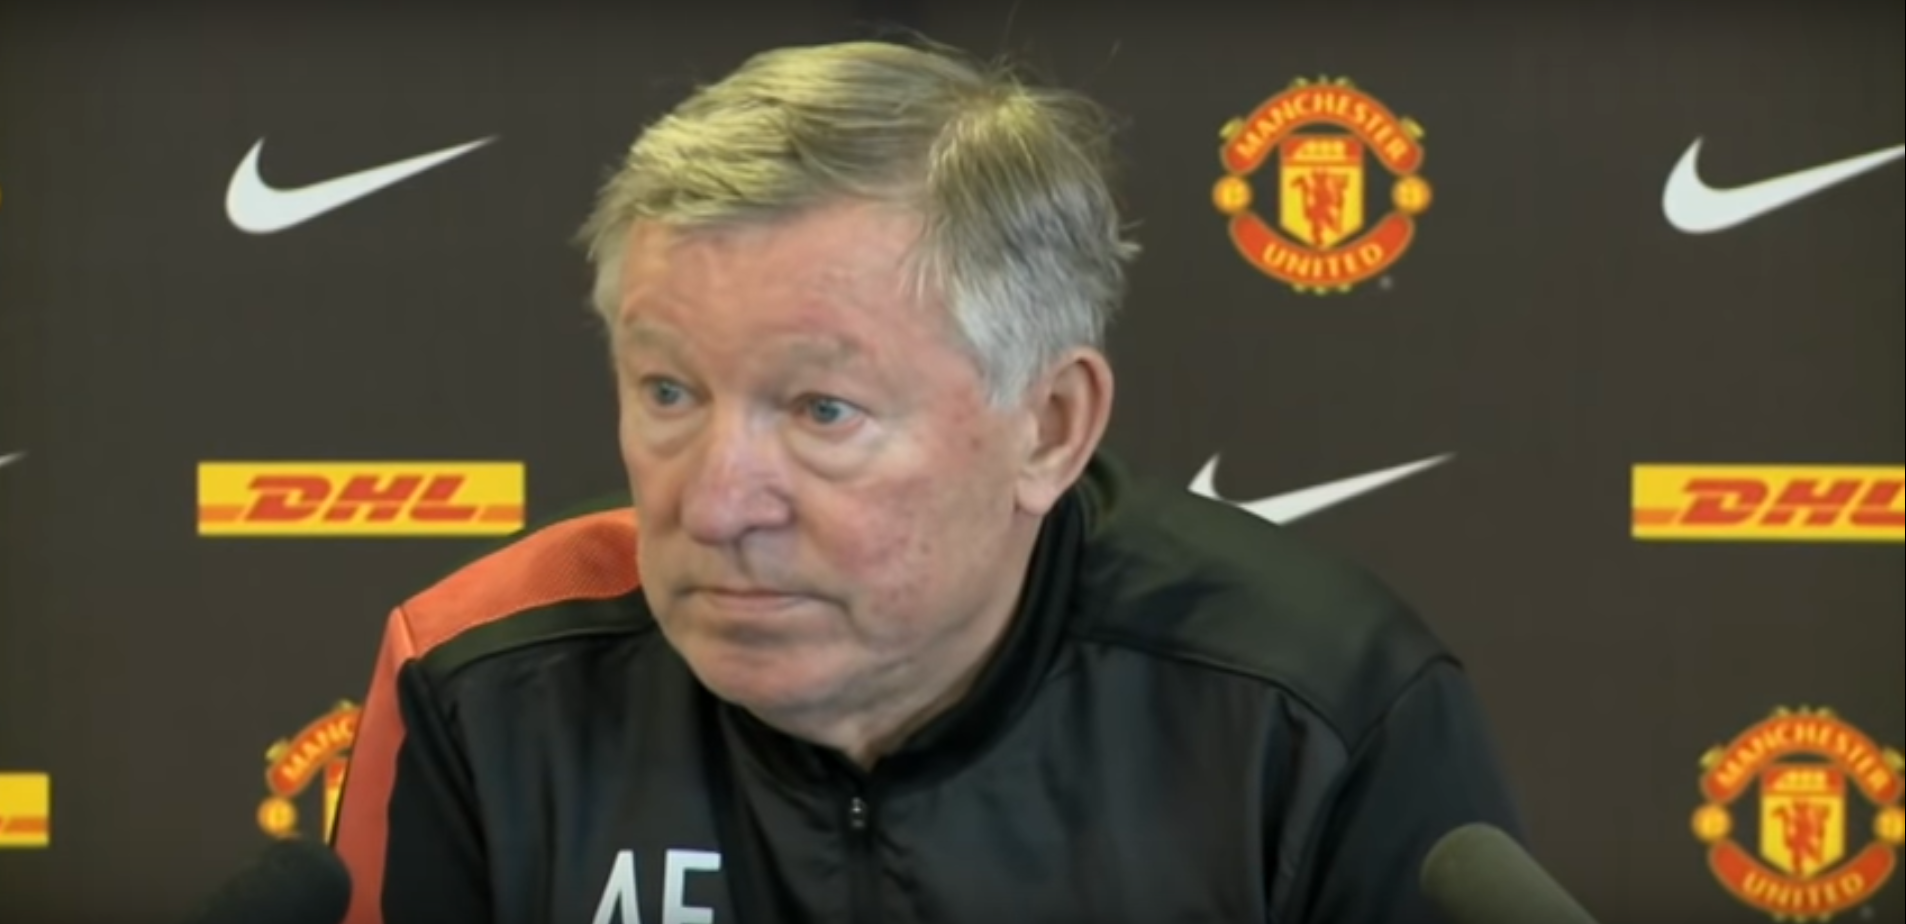 Sir Alex Ferguson - legendary Manchester United boss